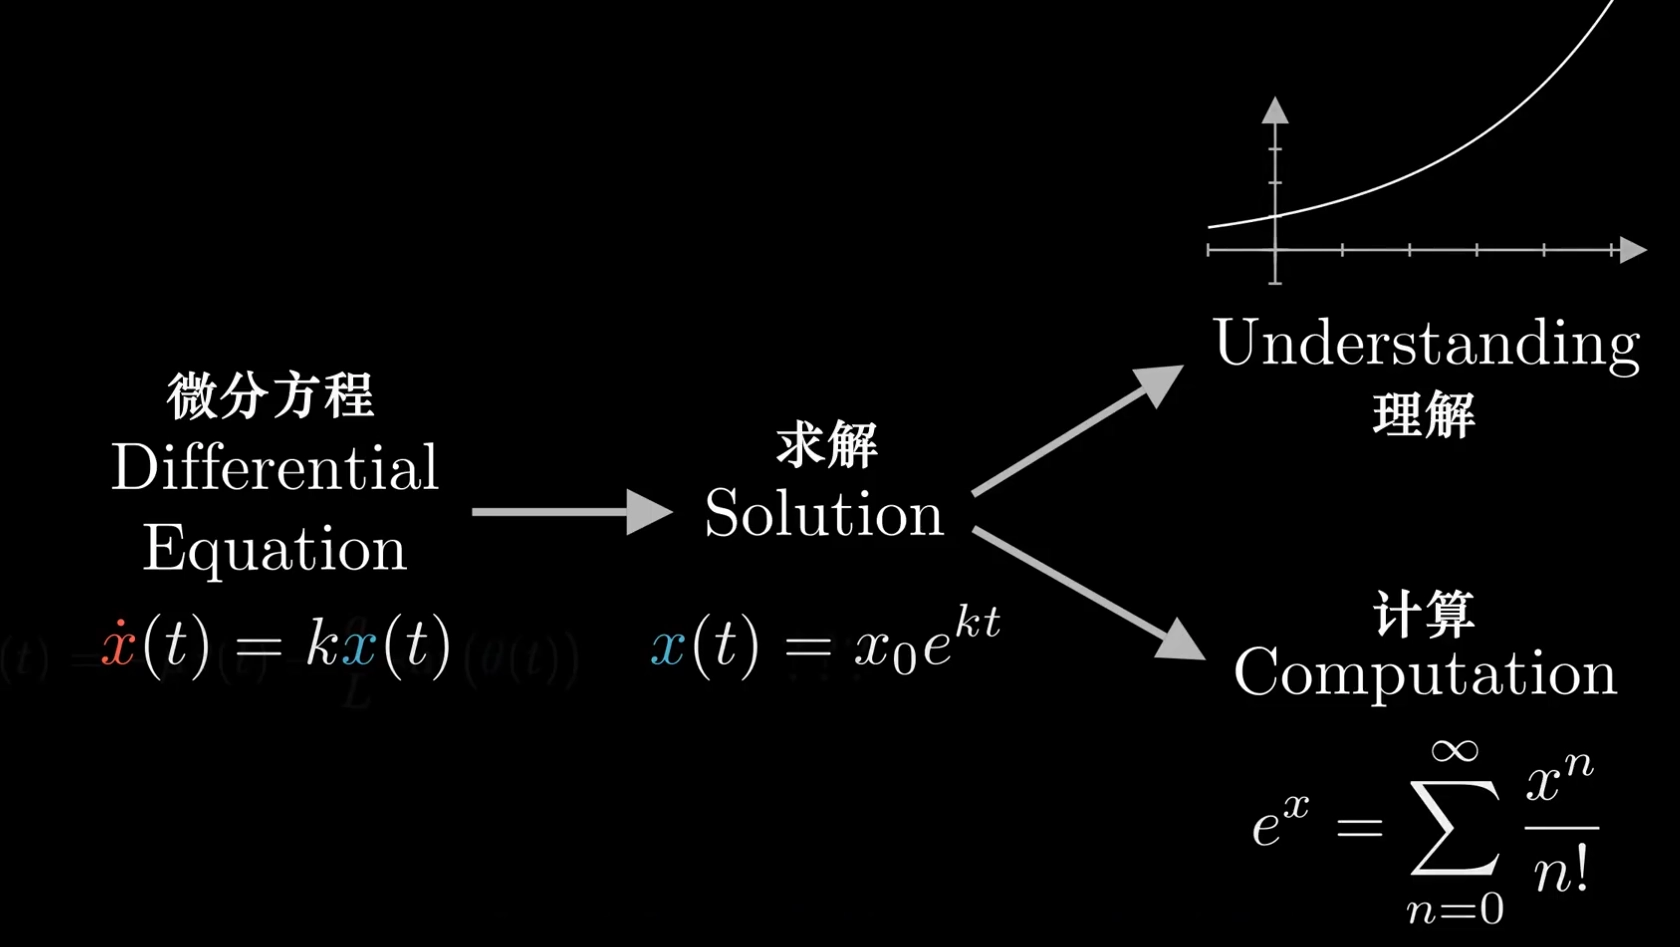 关于 Differential Equation 微分方程 的一些想法